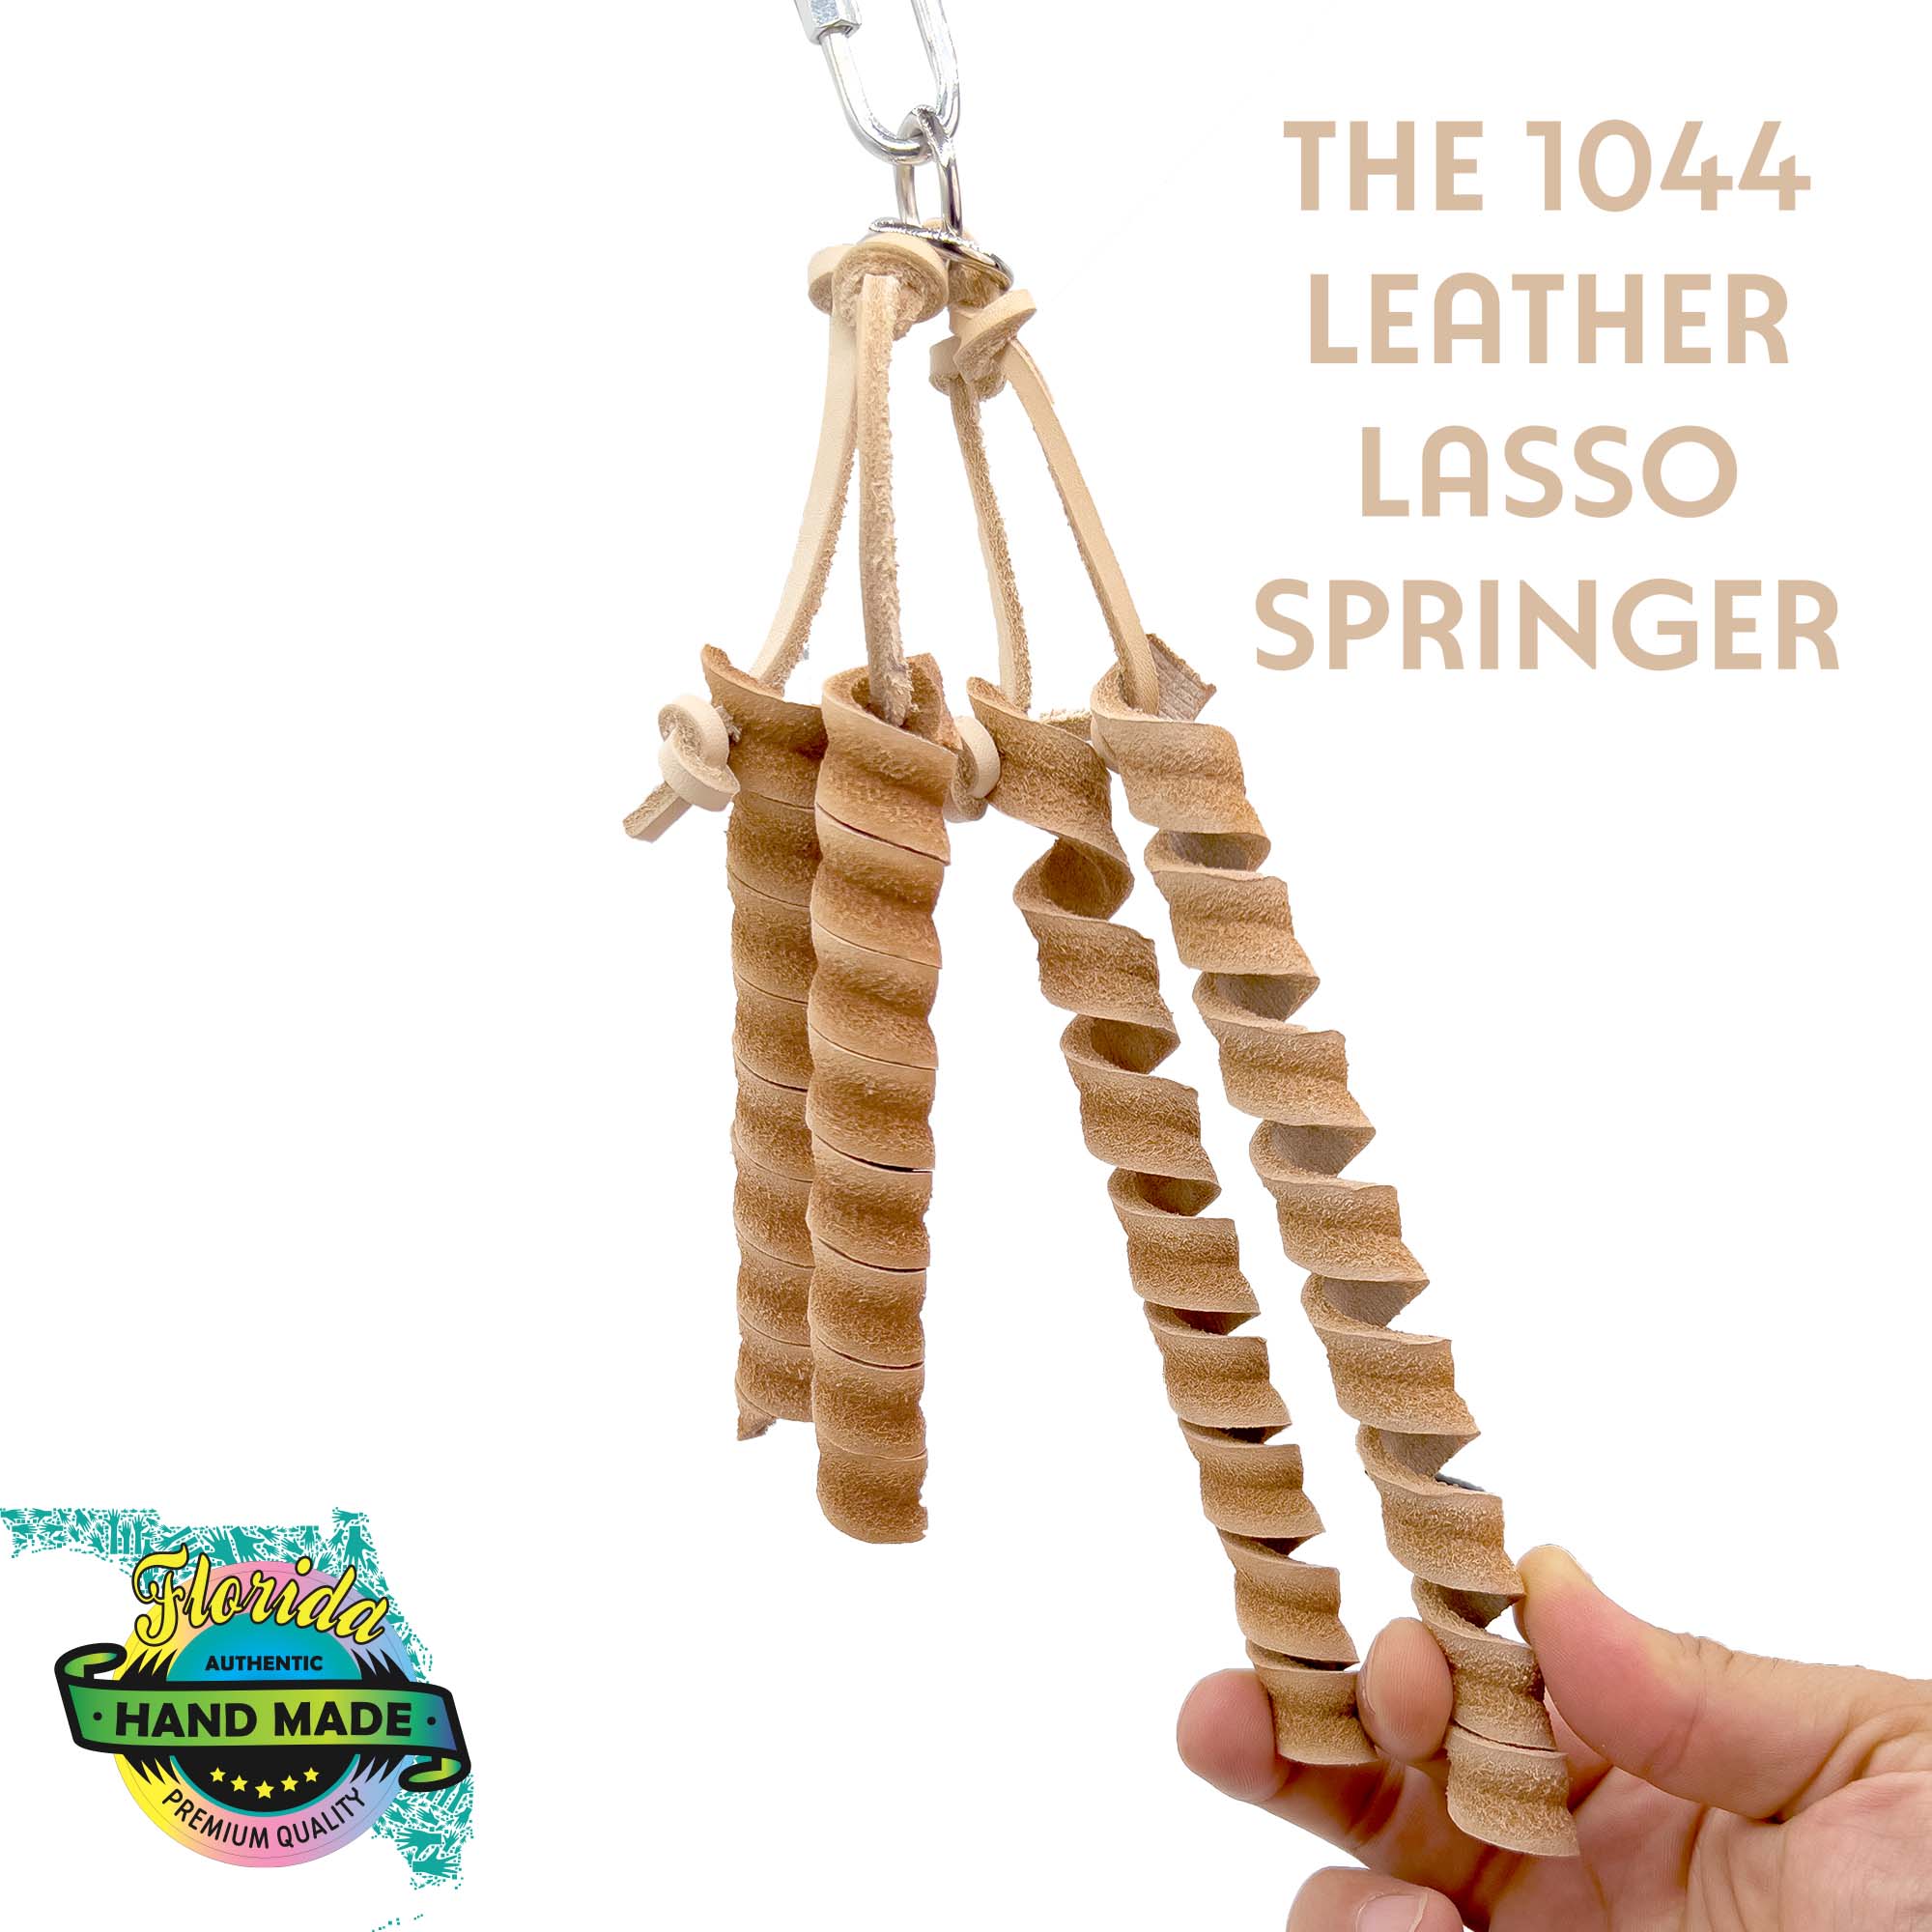 1044 Leather Lasso Springer